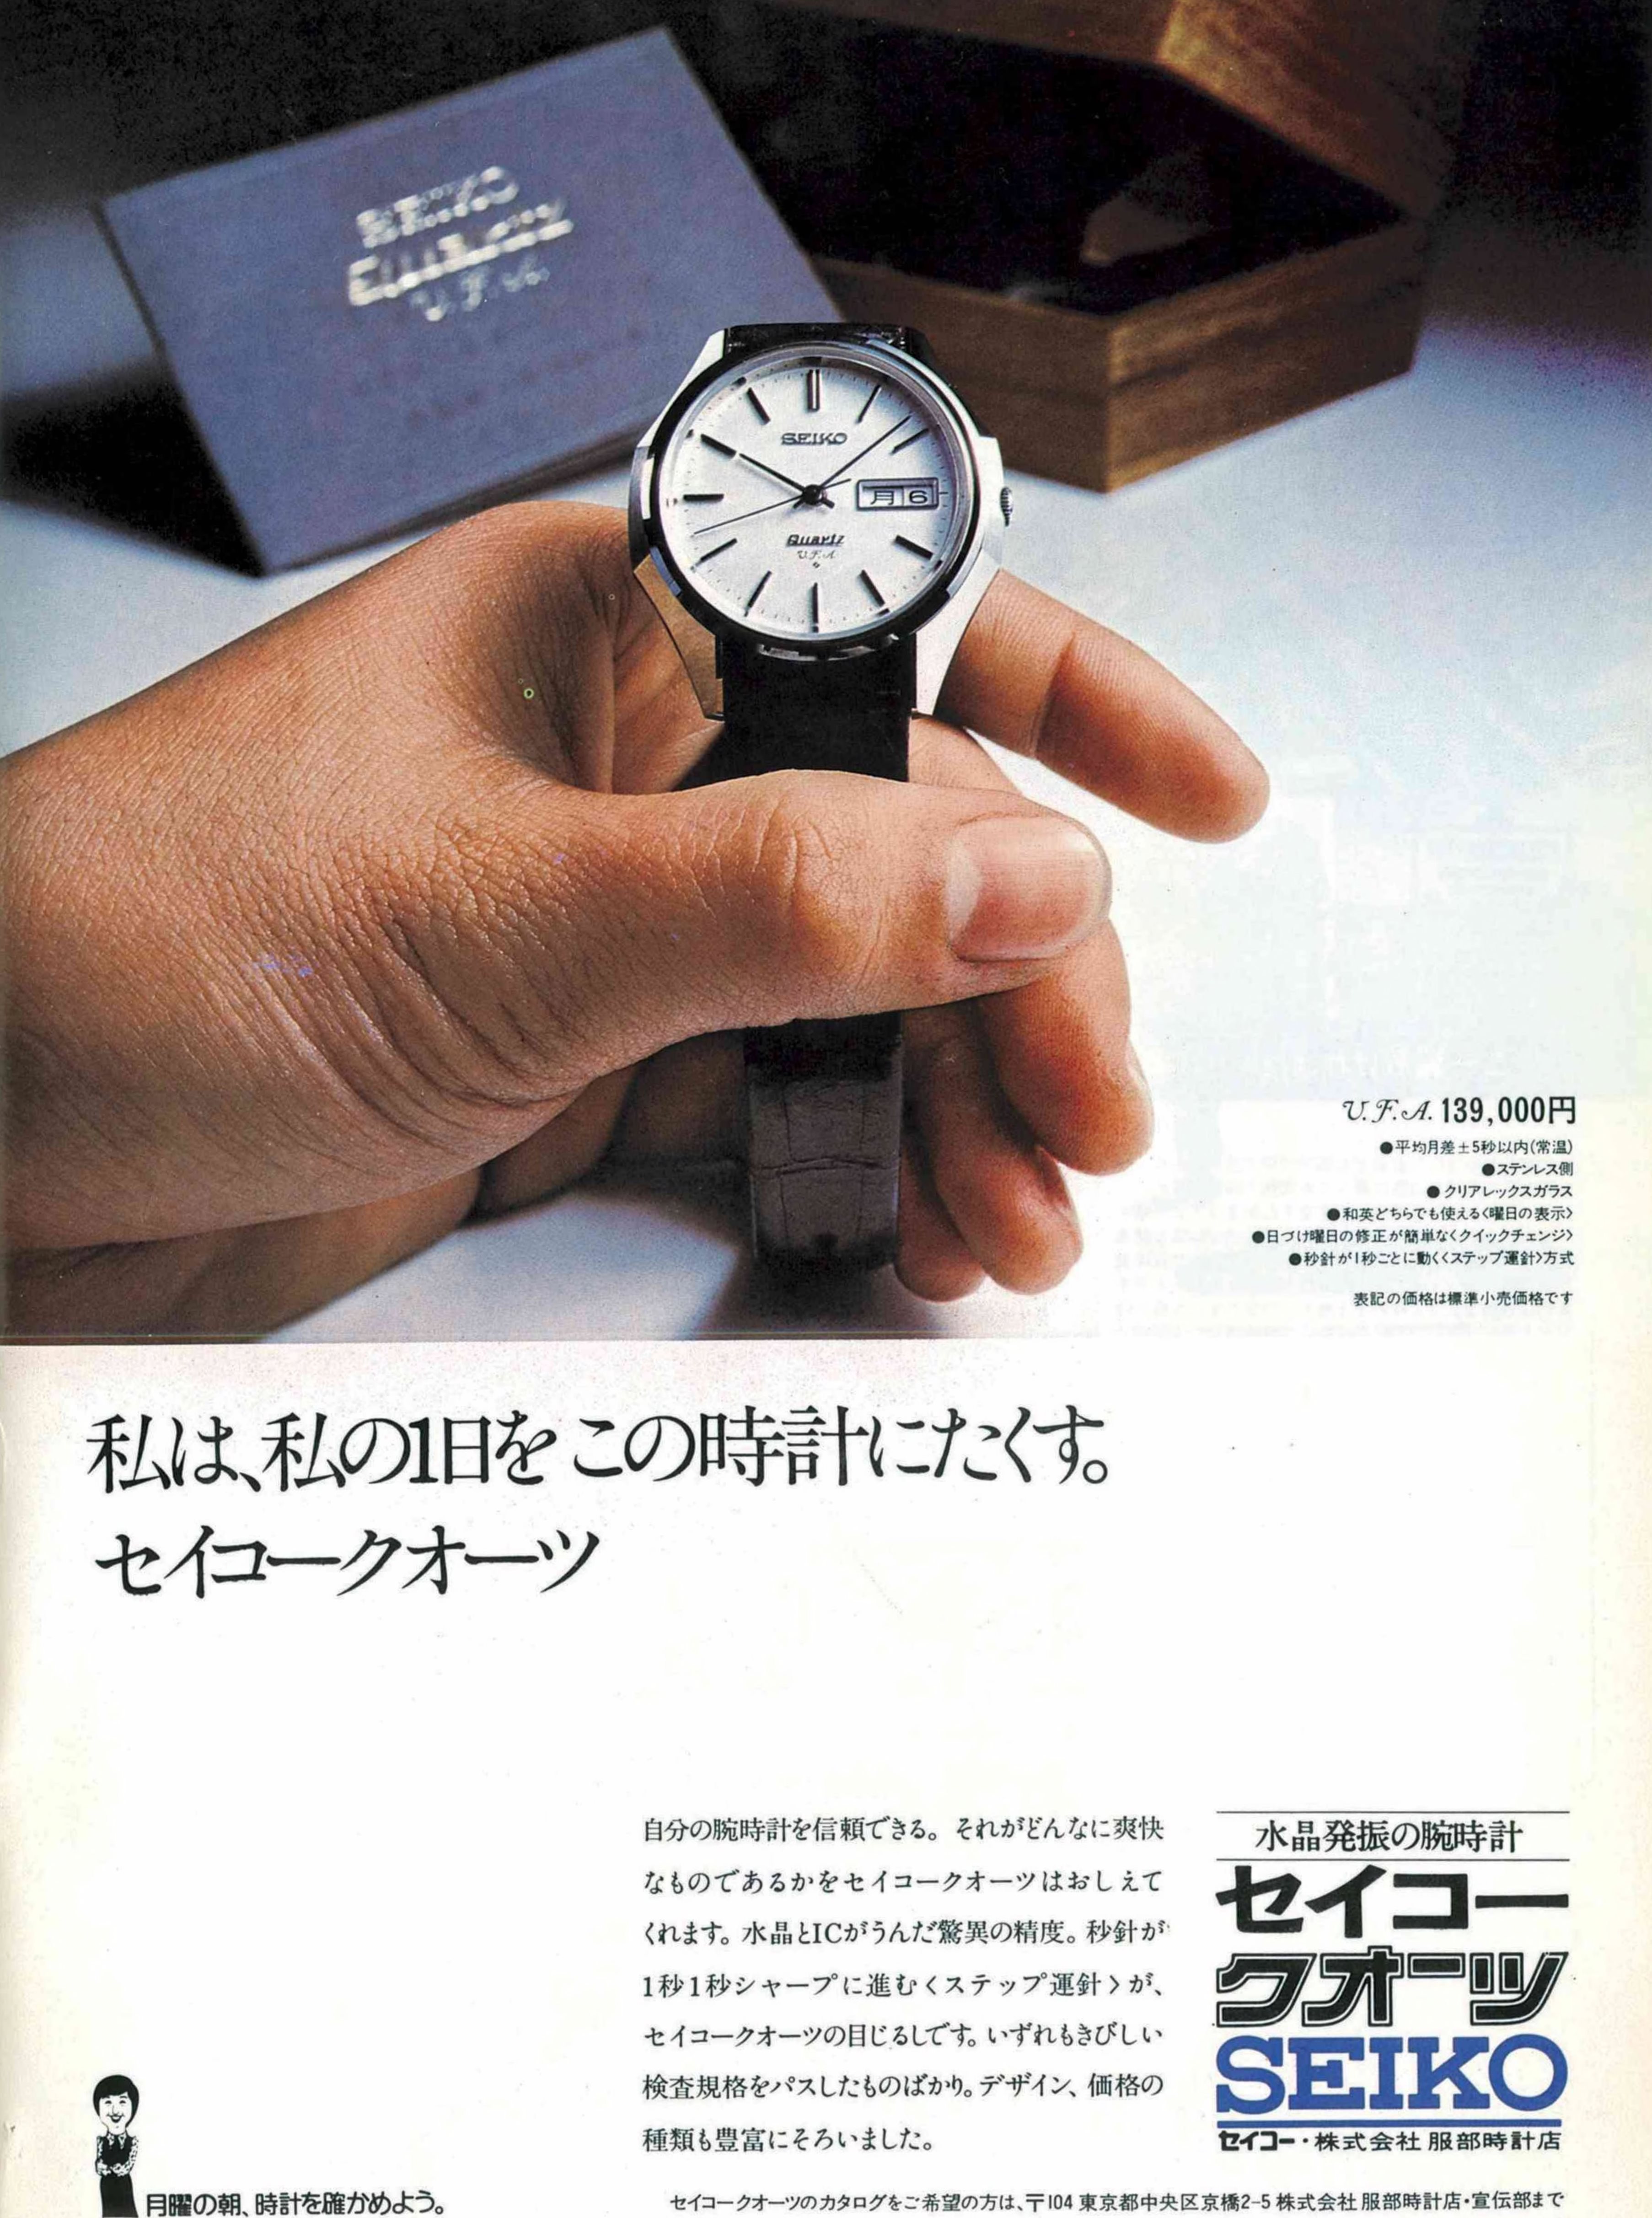 Seiko 1974 76.jpg